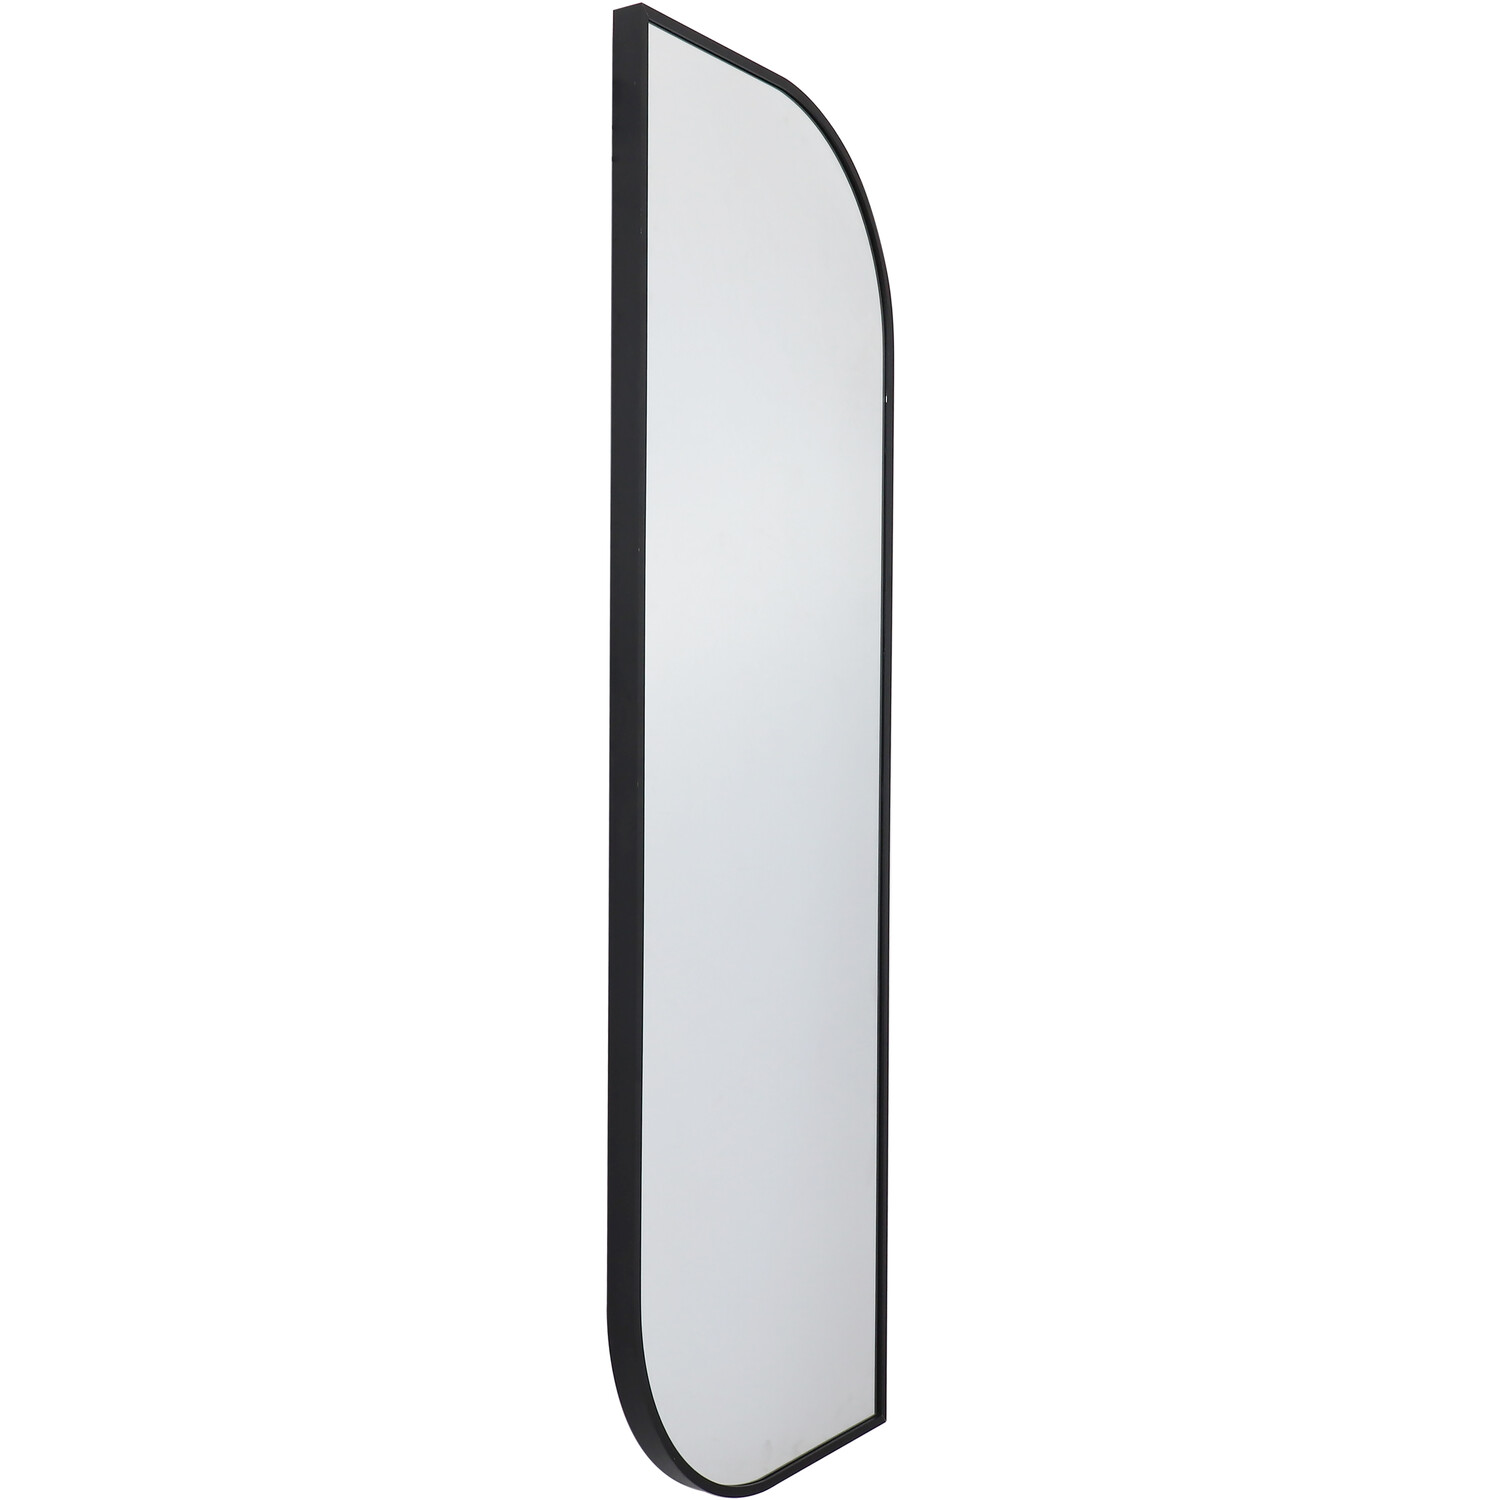 Thea Asymmetric Black Mirror Image 2